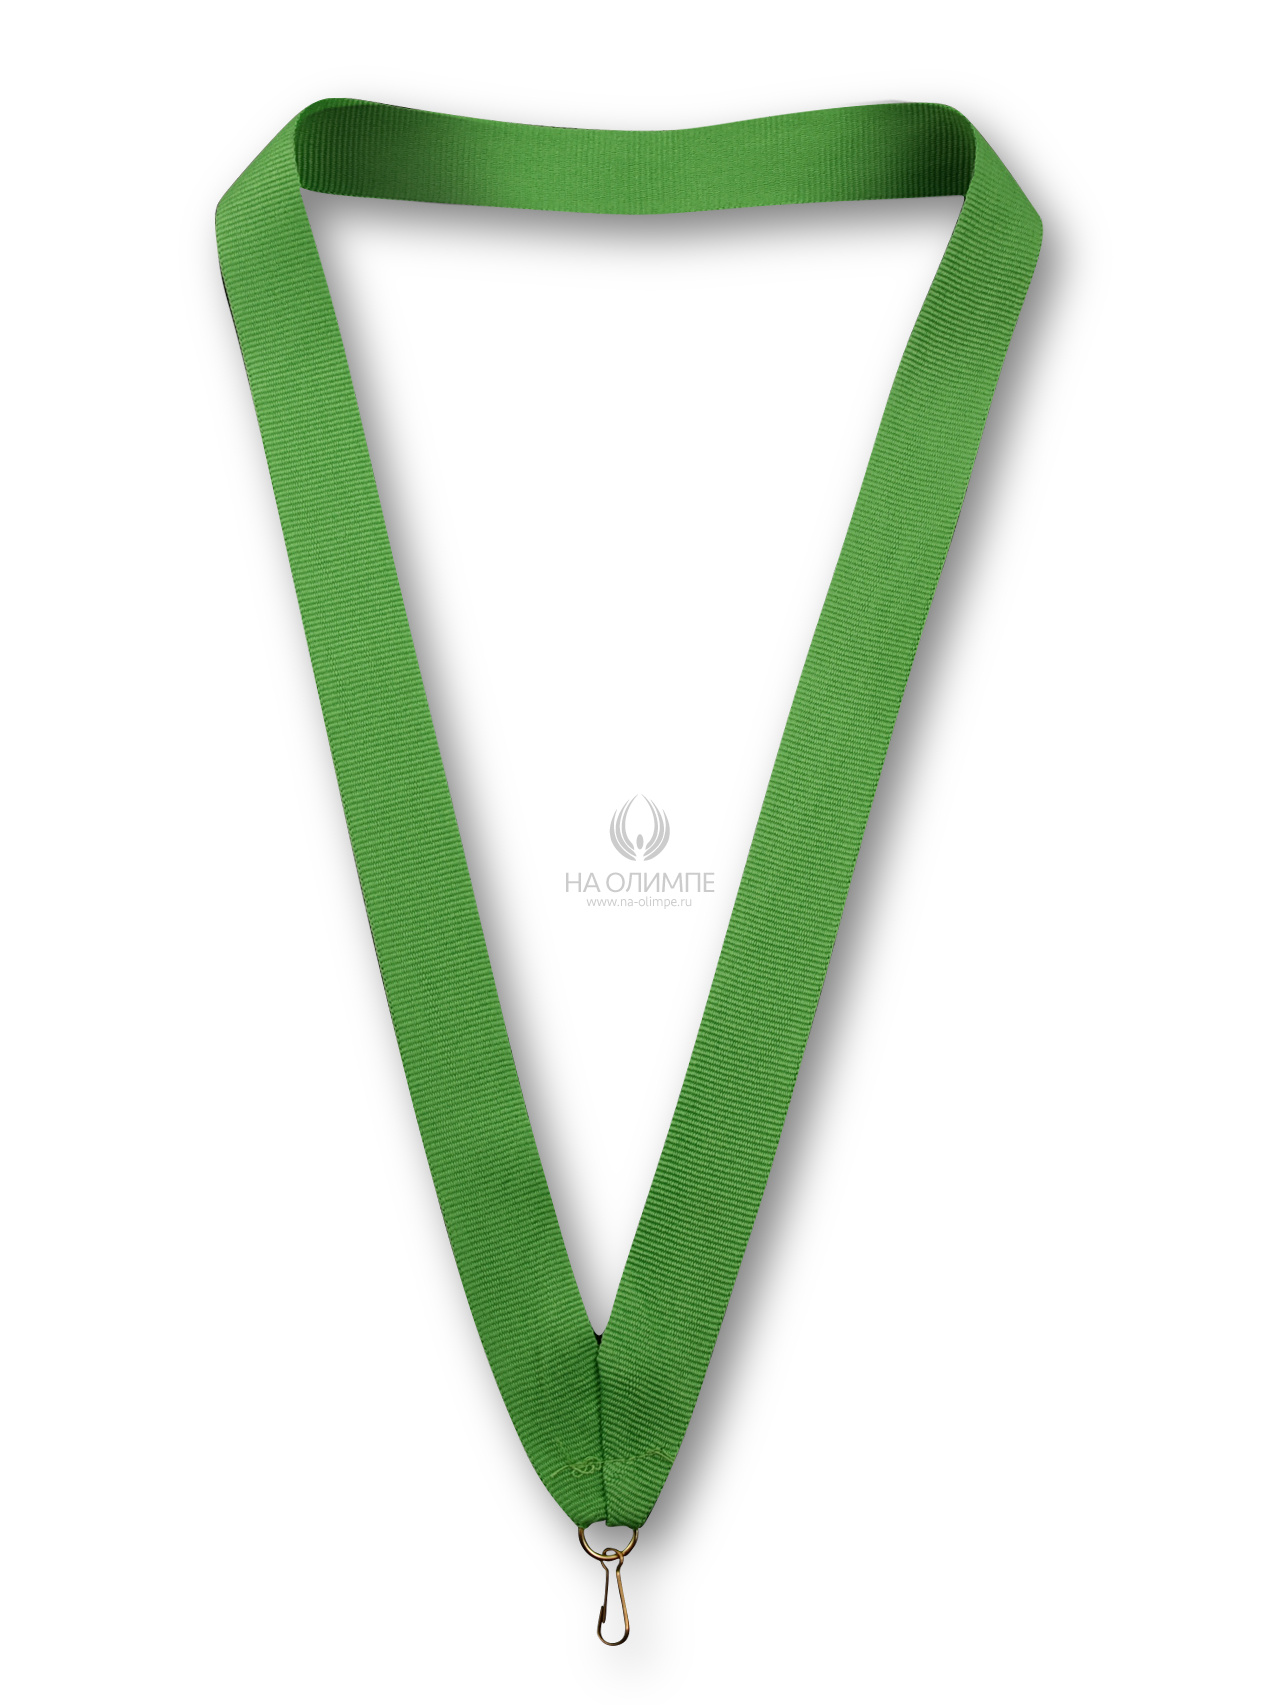 Лента для медали зеленая 11мм, ширина ленты 11 мм